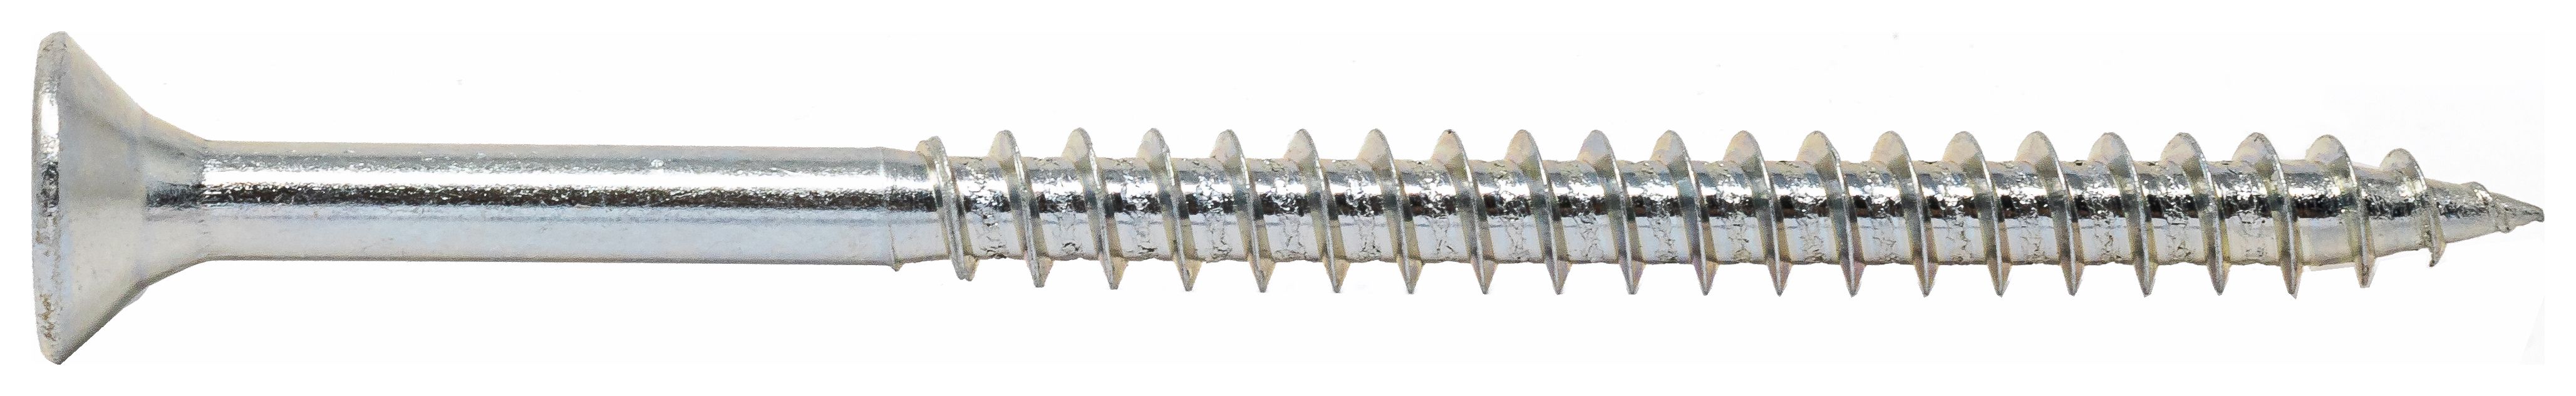 Wickes Single Thread Zinc Plated Screw - 4 X 16mm Pack Of 200